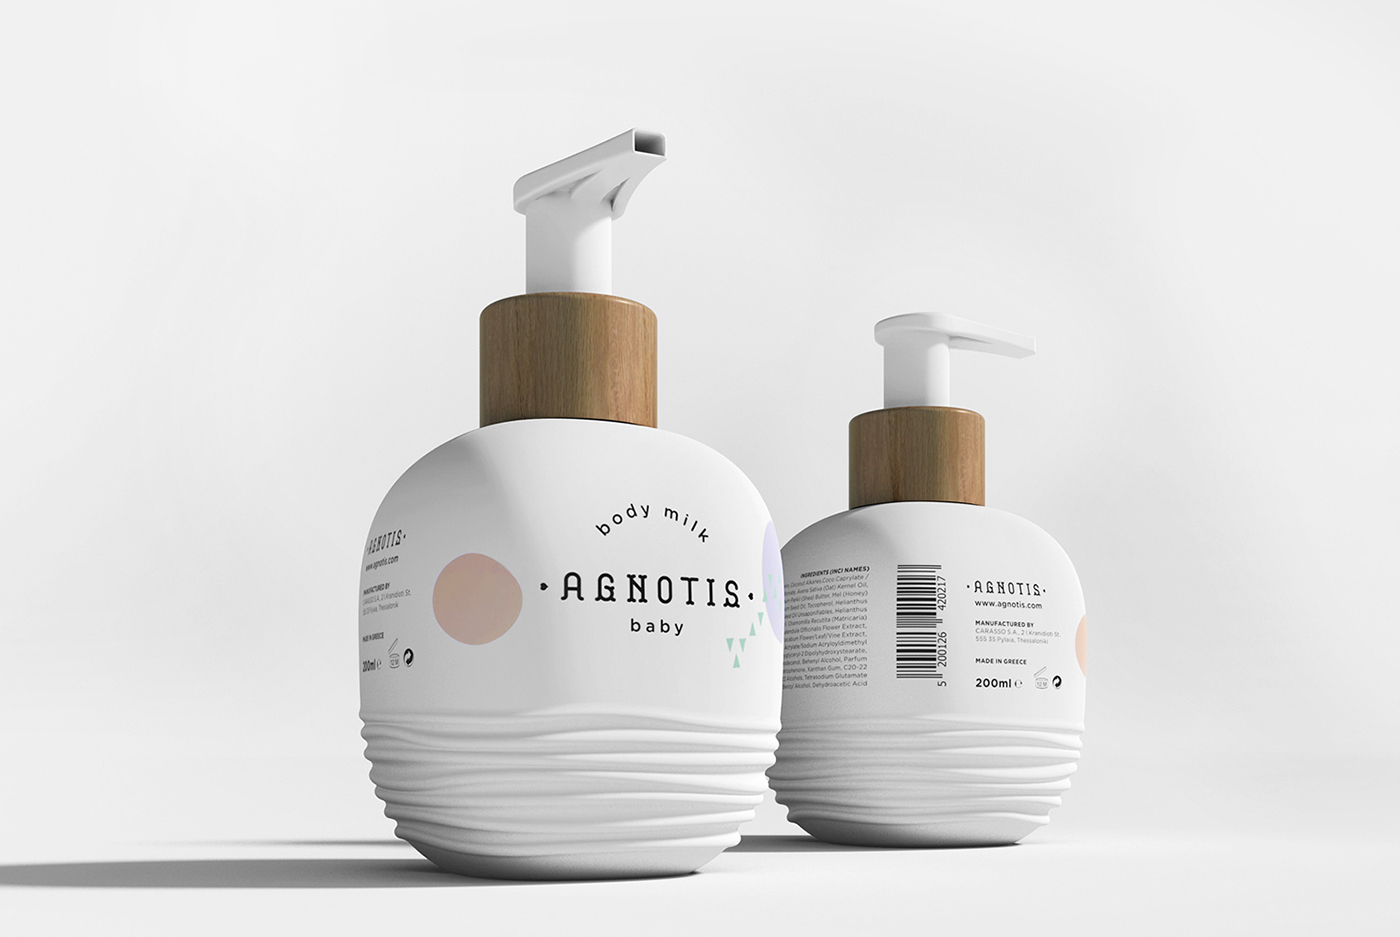 Agnotis婴儿沐浴用品包装设计